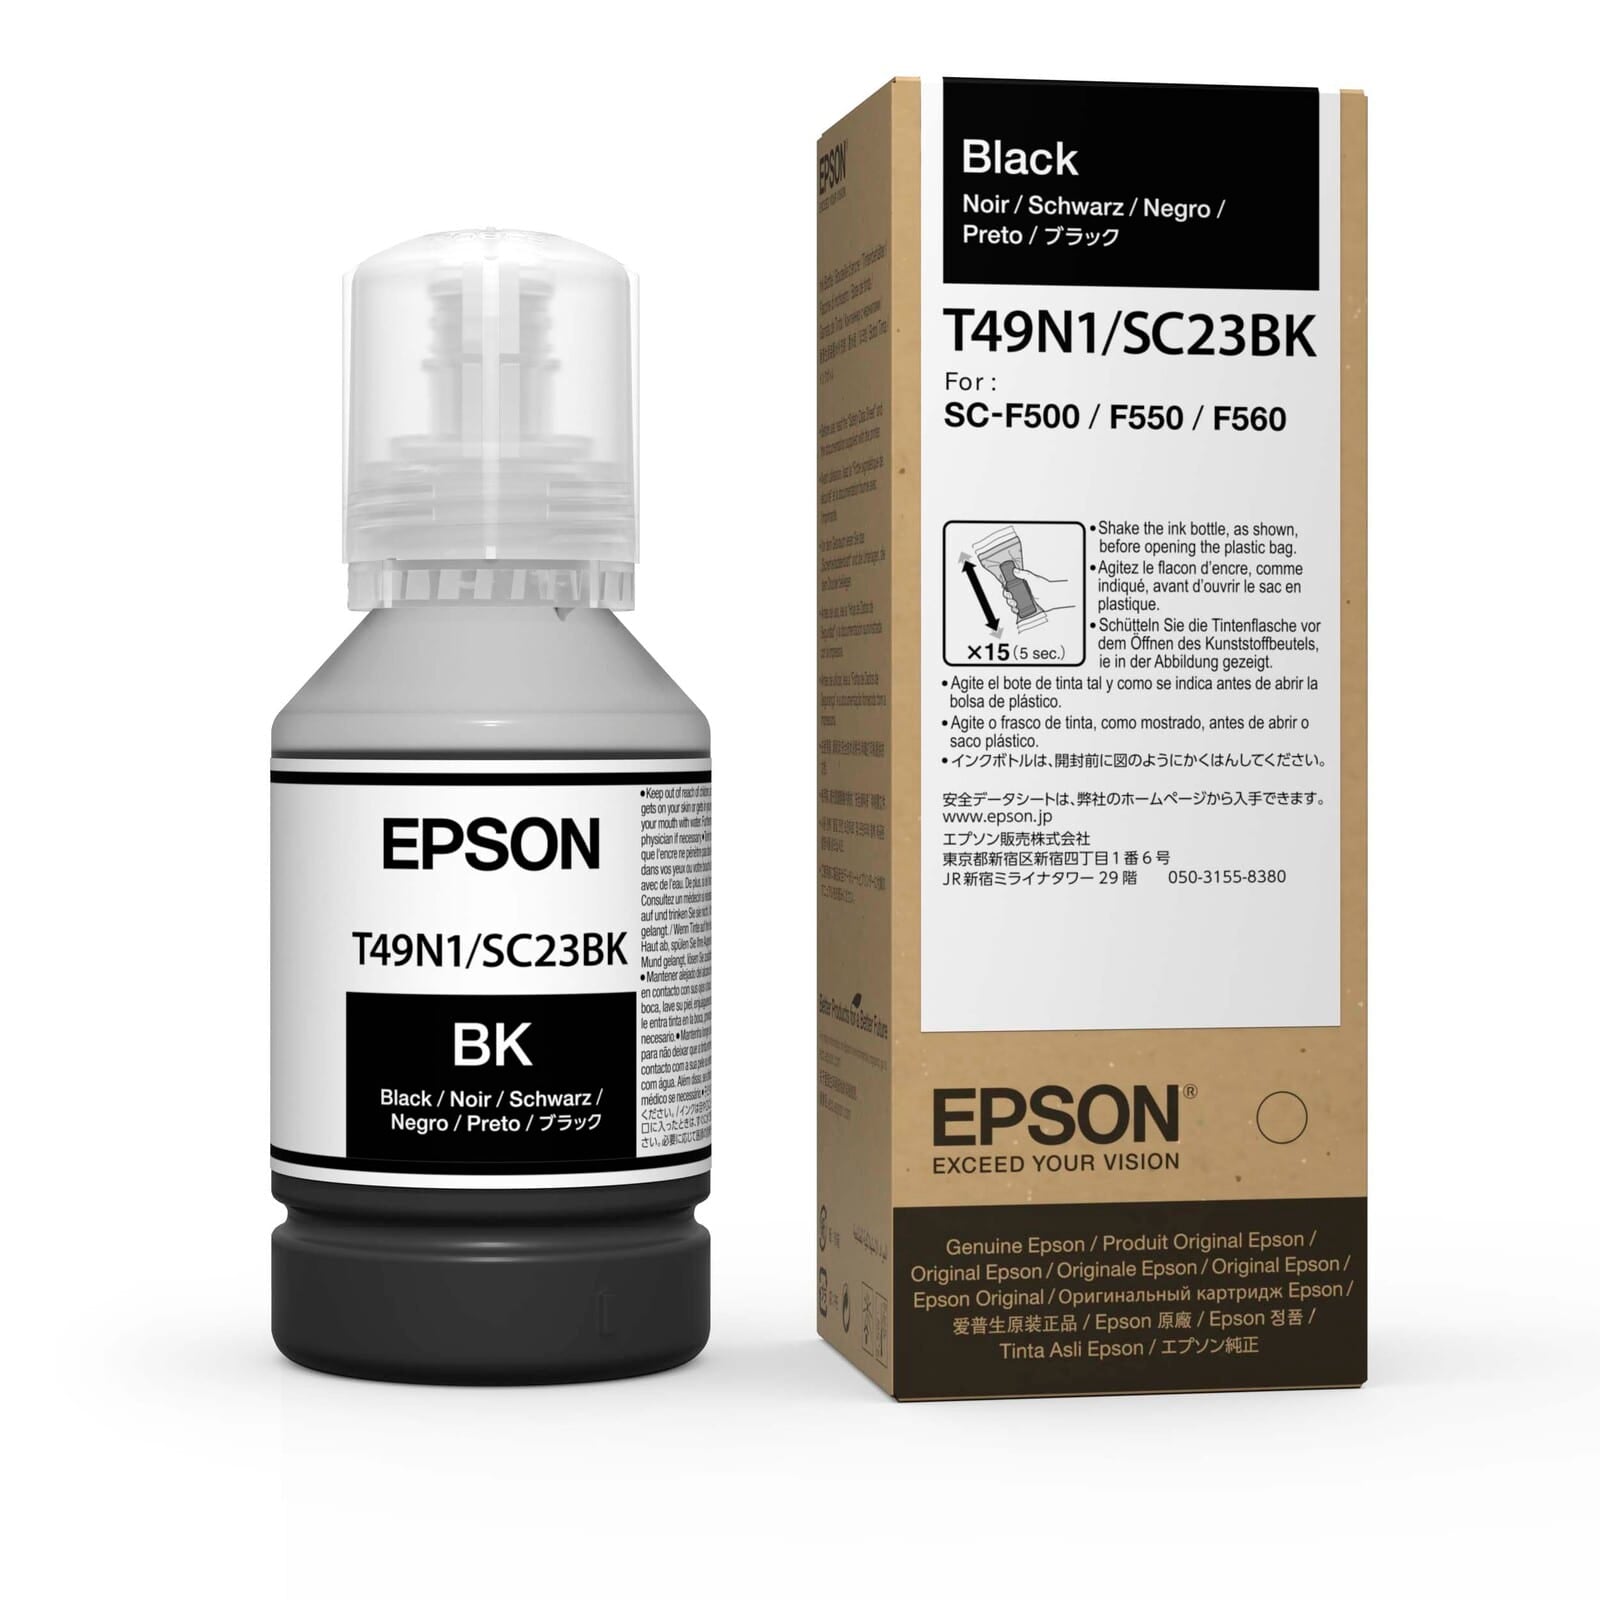 Epson genuine black sublimation ink 140ml bottle for SC-F500 / F501 / F550 / F551 / F560 / F561 / F100 / F160